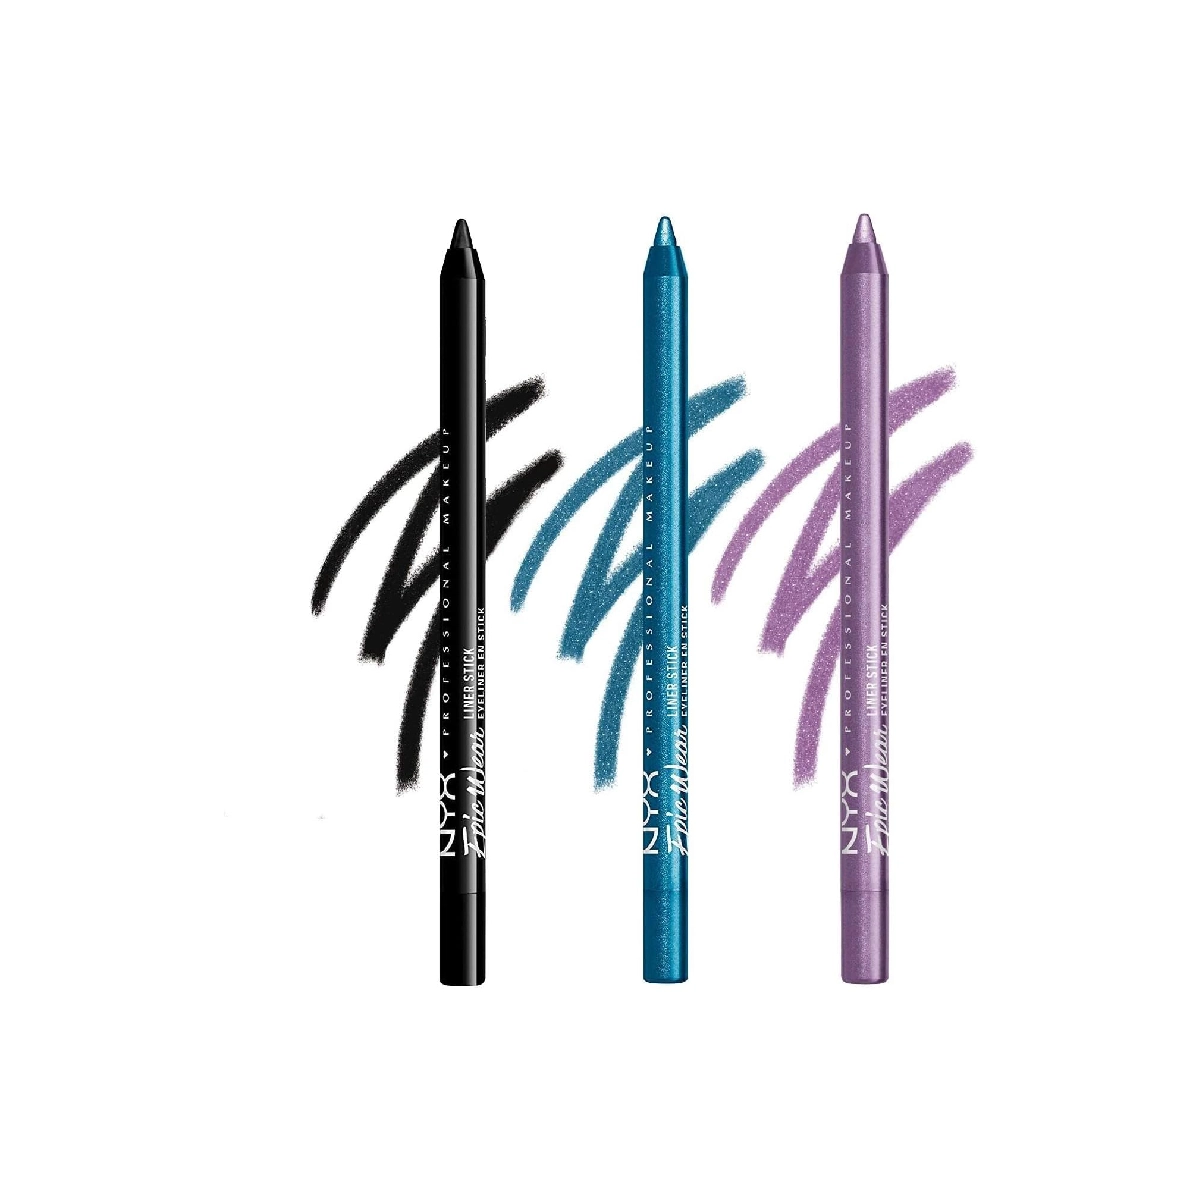 NYX Professional Makeup Long-Lasting Eyeliner Pack of 3 - Black, Turquoise, Purple